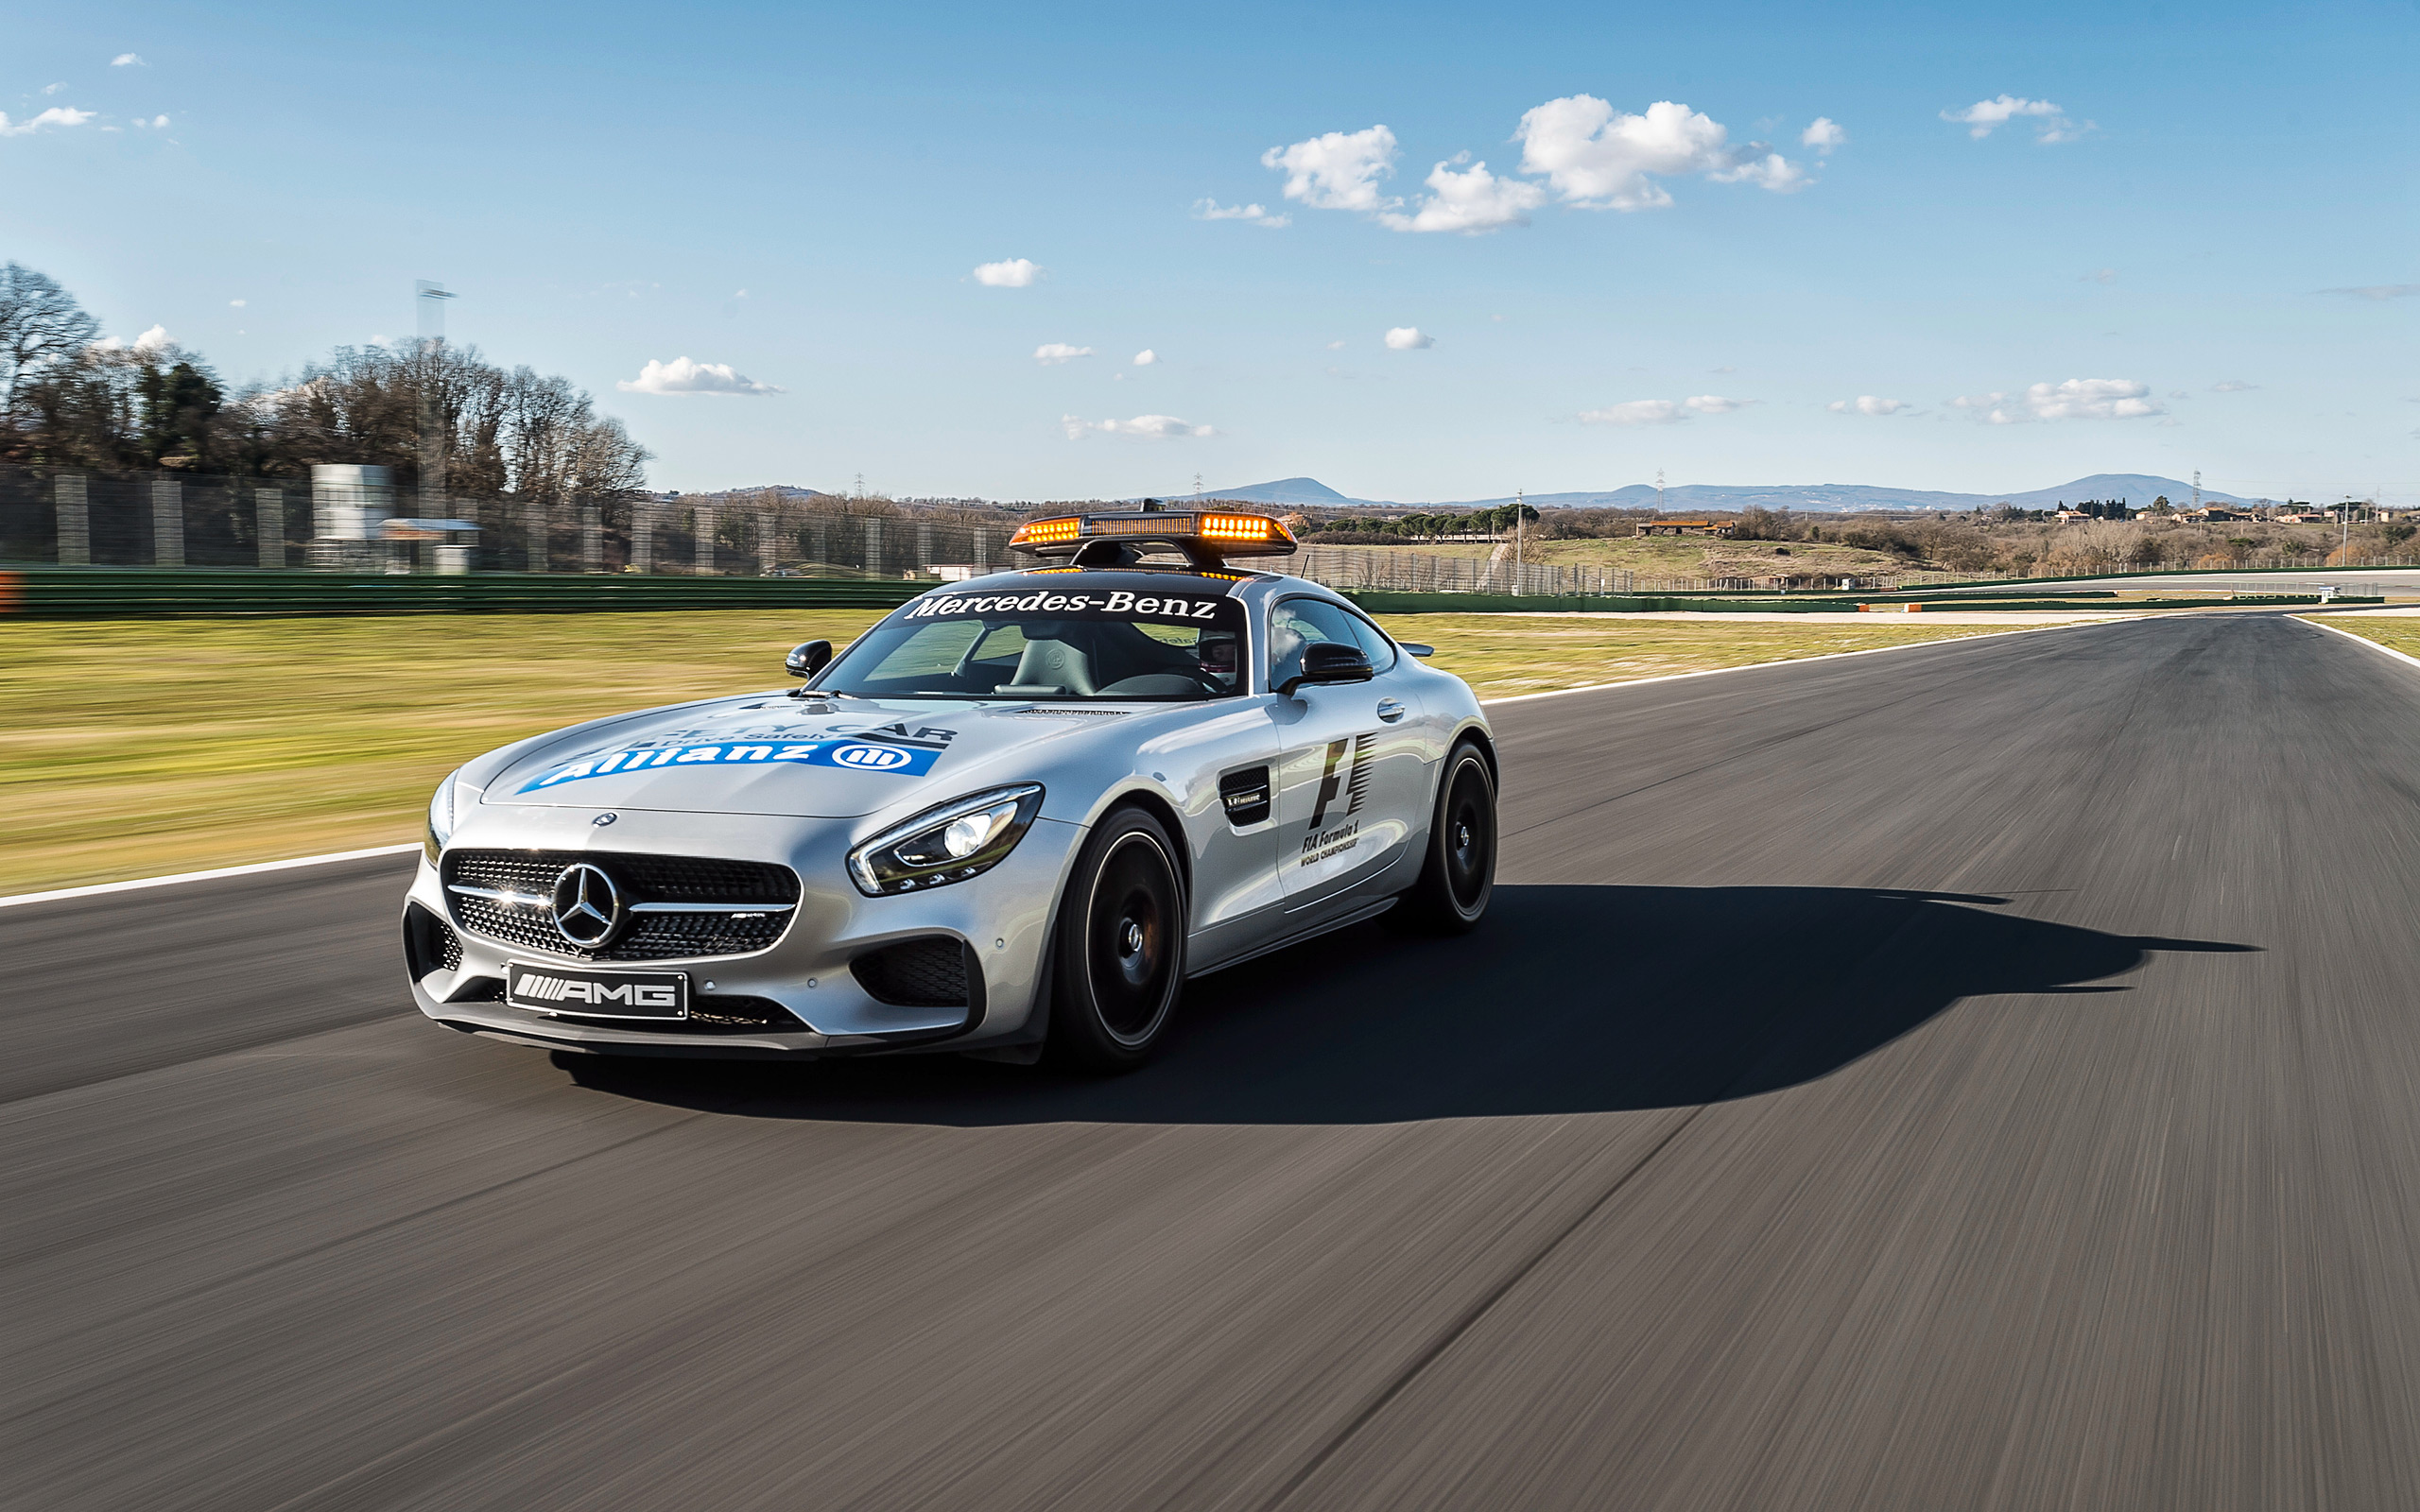  2015 Mercedes-AMG GT S F1 Safety Car Wallpaper.